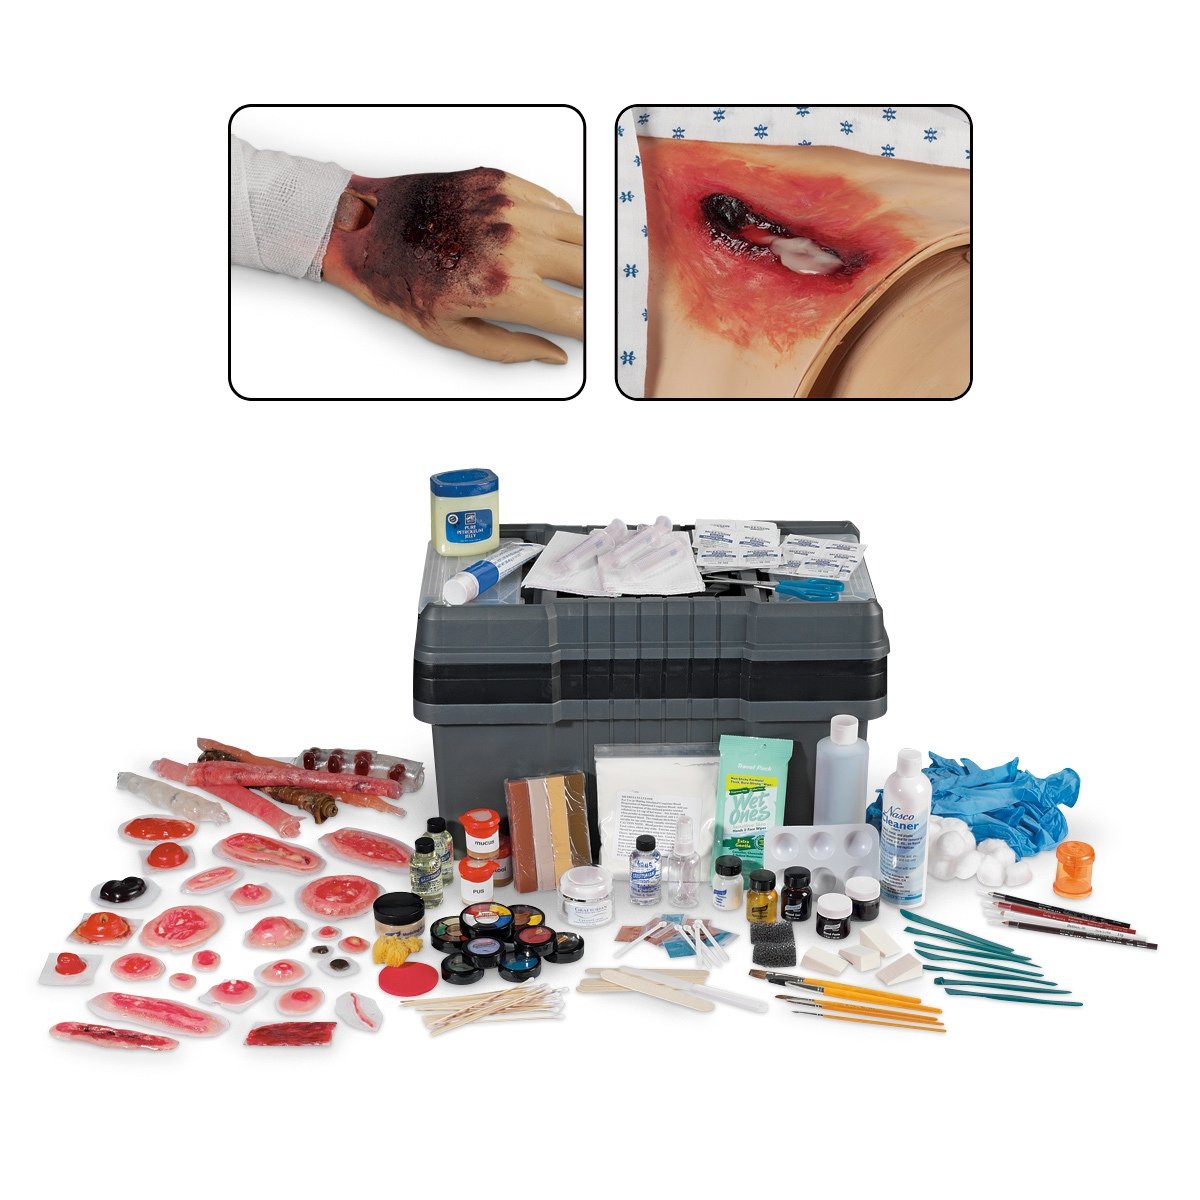 Simulaids Nursing Care Moulage Kit